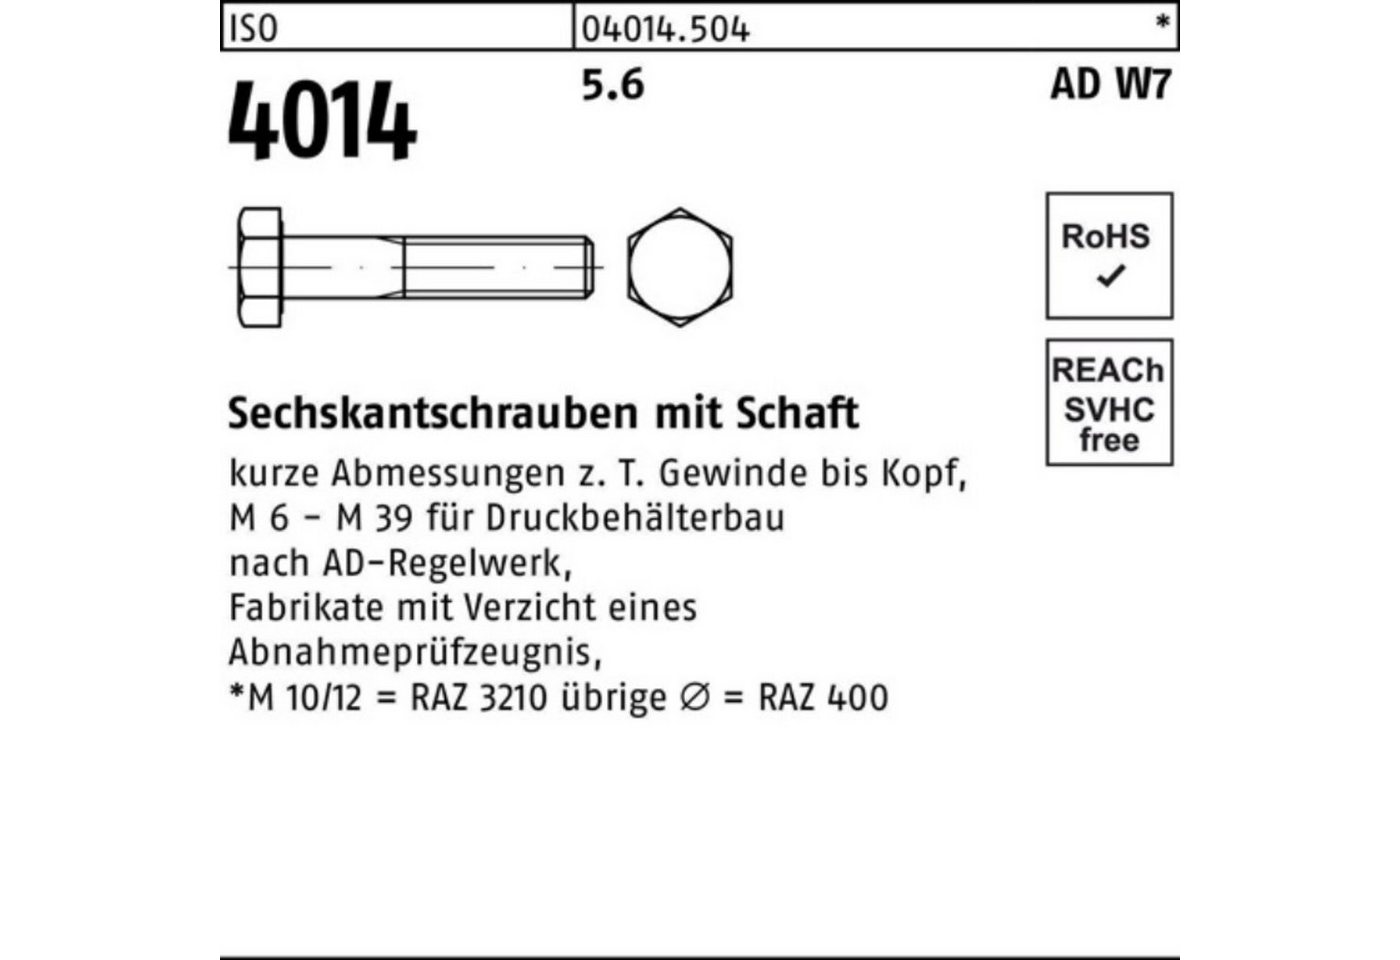 Bufab Sechskantschraube 100er Pack Sechskantschraube ISO 4014 Schaft M27x 120 5.6 W7 1 Stück von Bufab